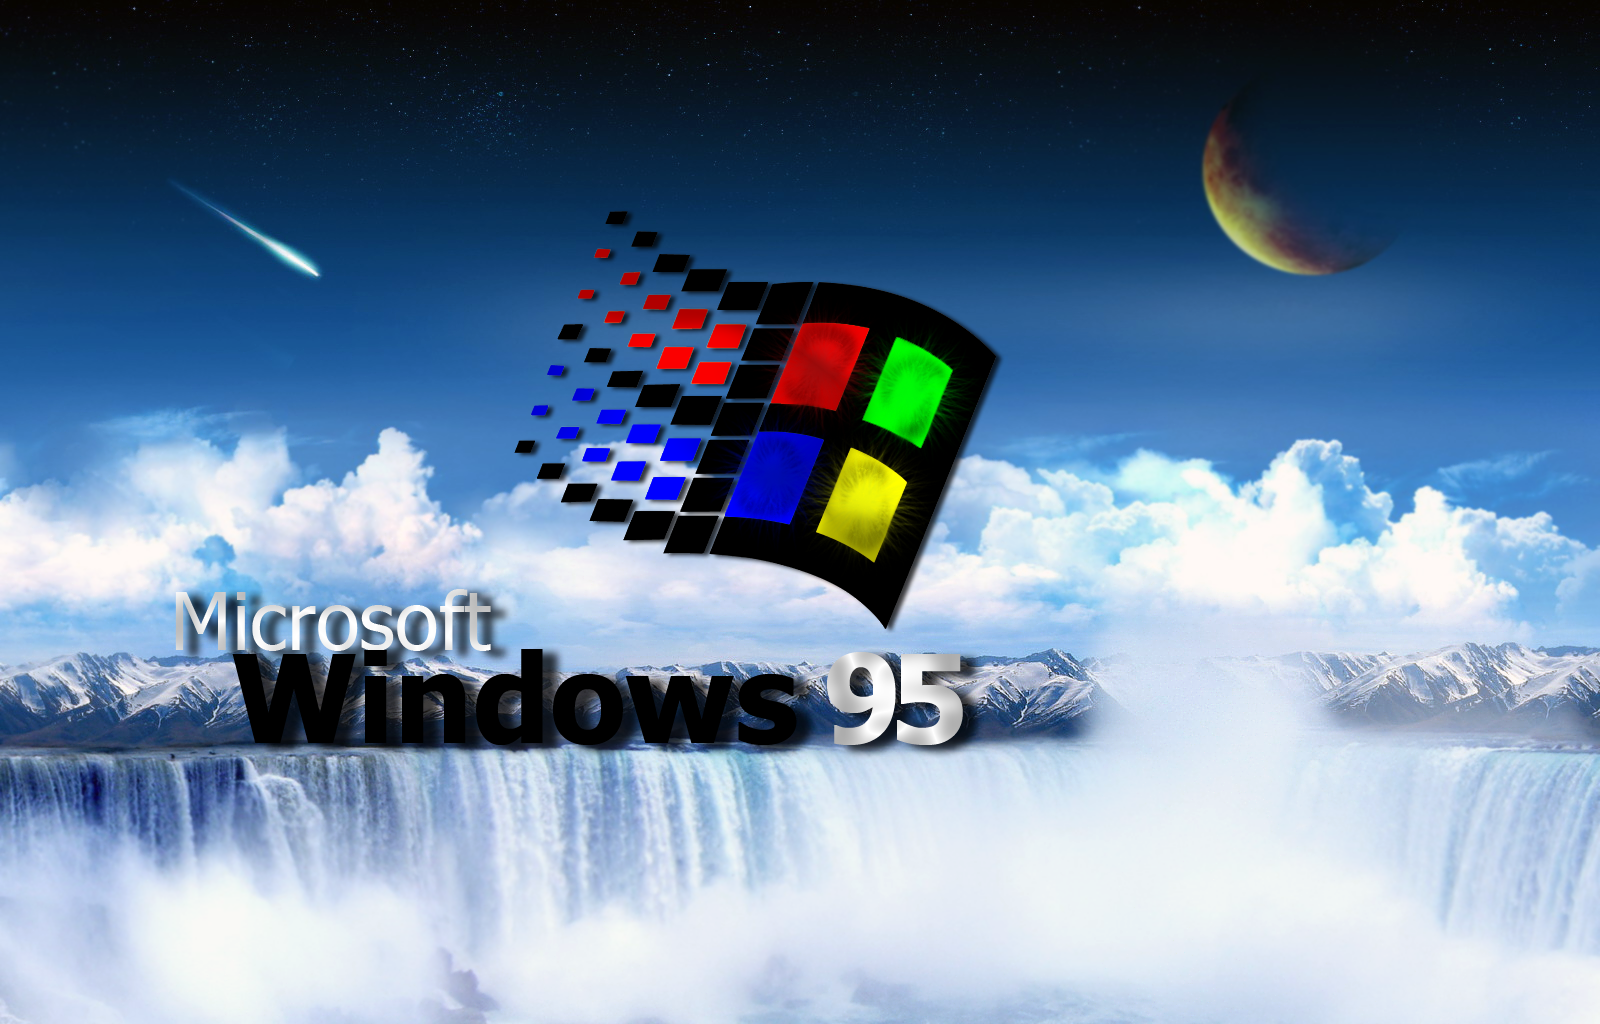 windows 95 wallpaper,operating system,sky,rubik's cube,logo,font